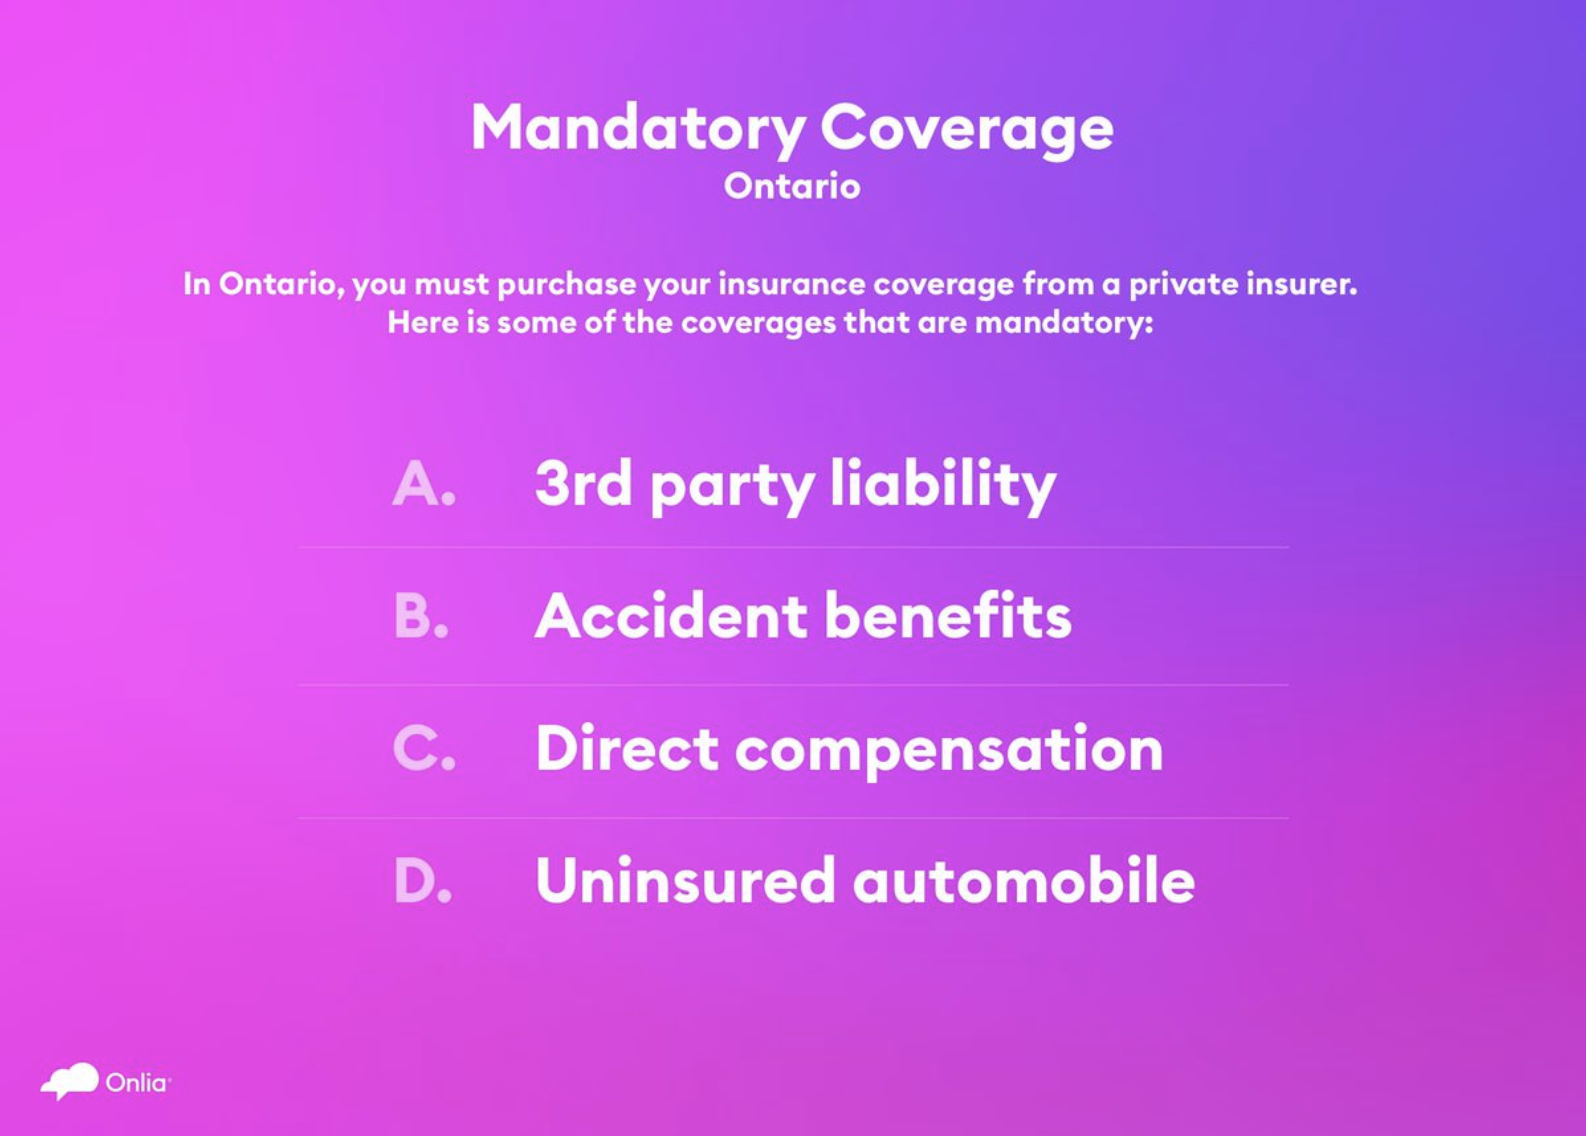 Mandatory car insurance coverage in Ontario